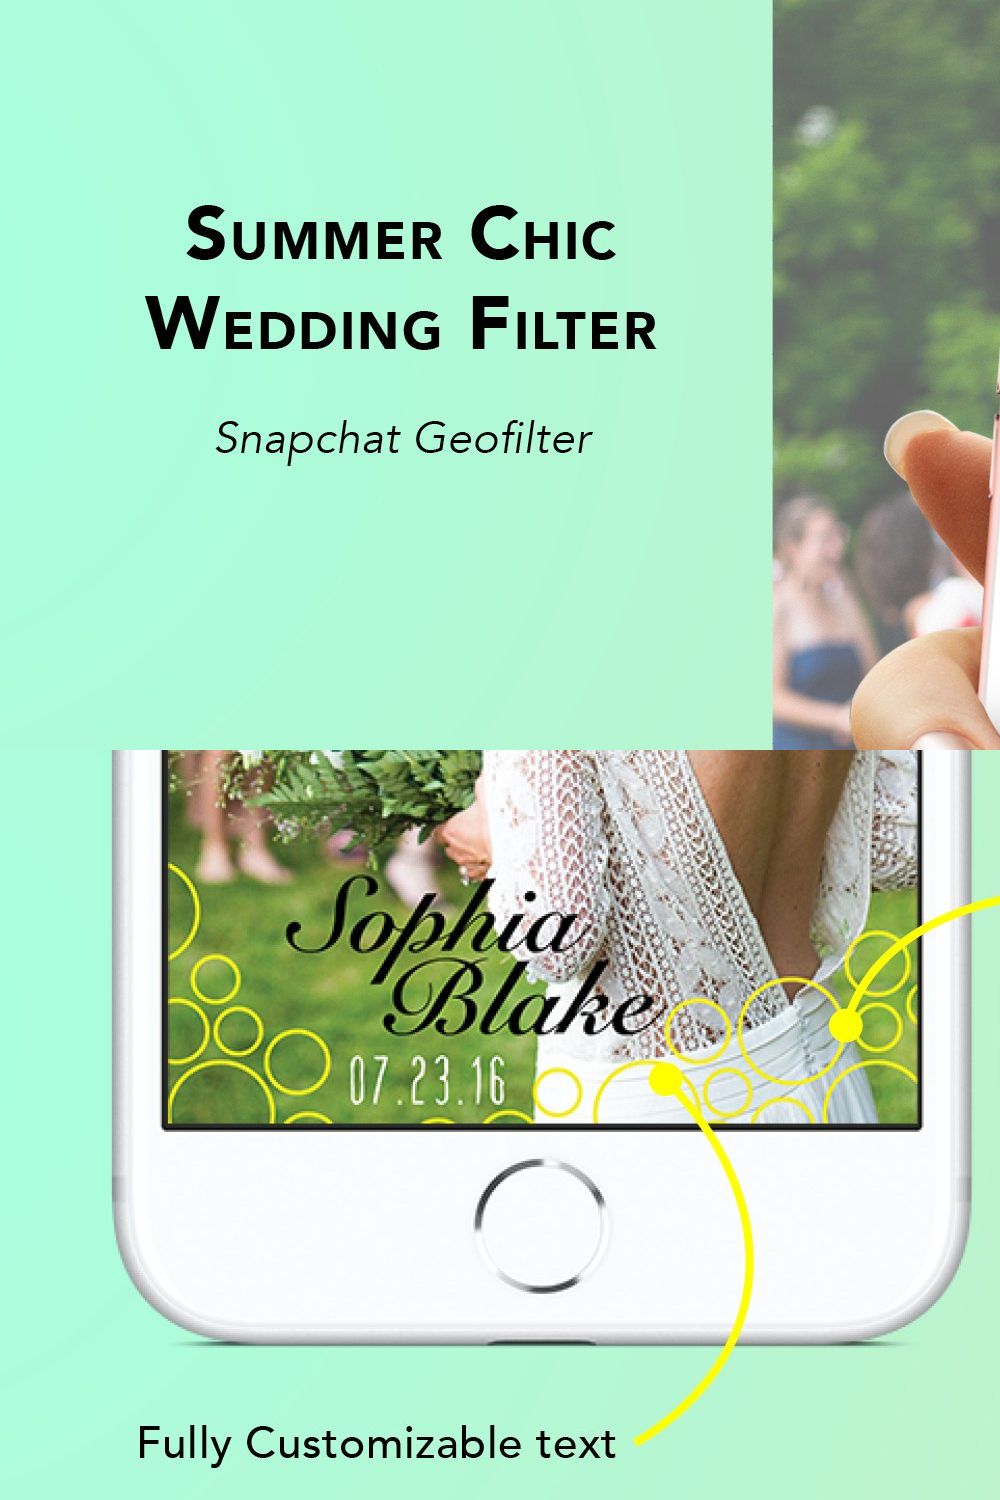 Summer Chic Wedding Geofilter pinterest preview image.